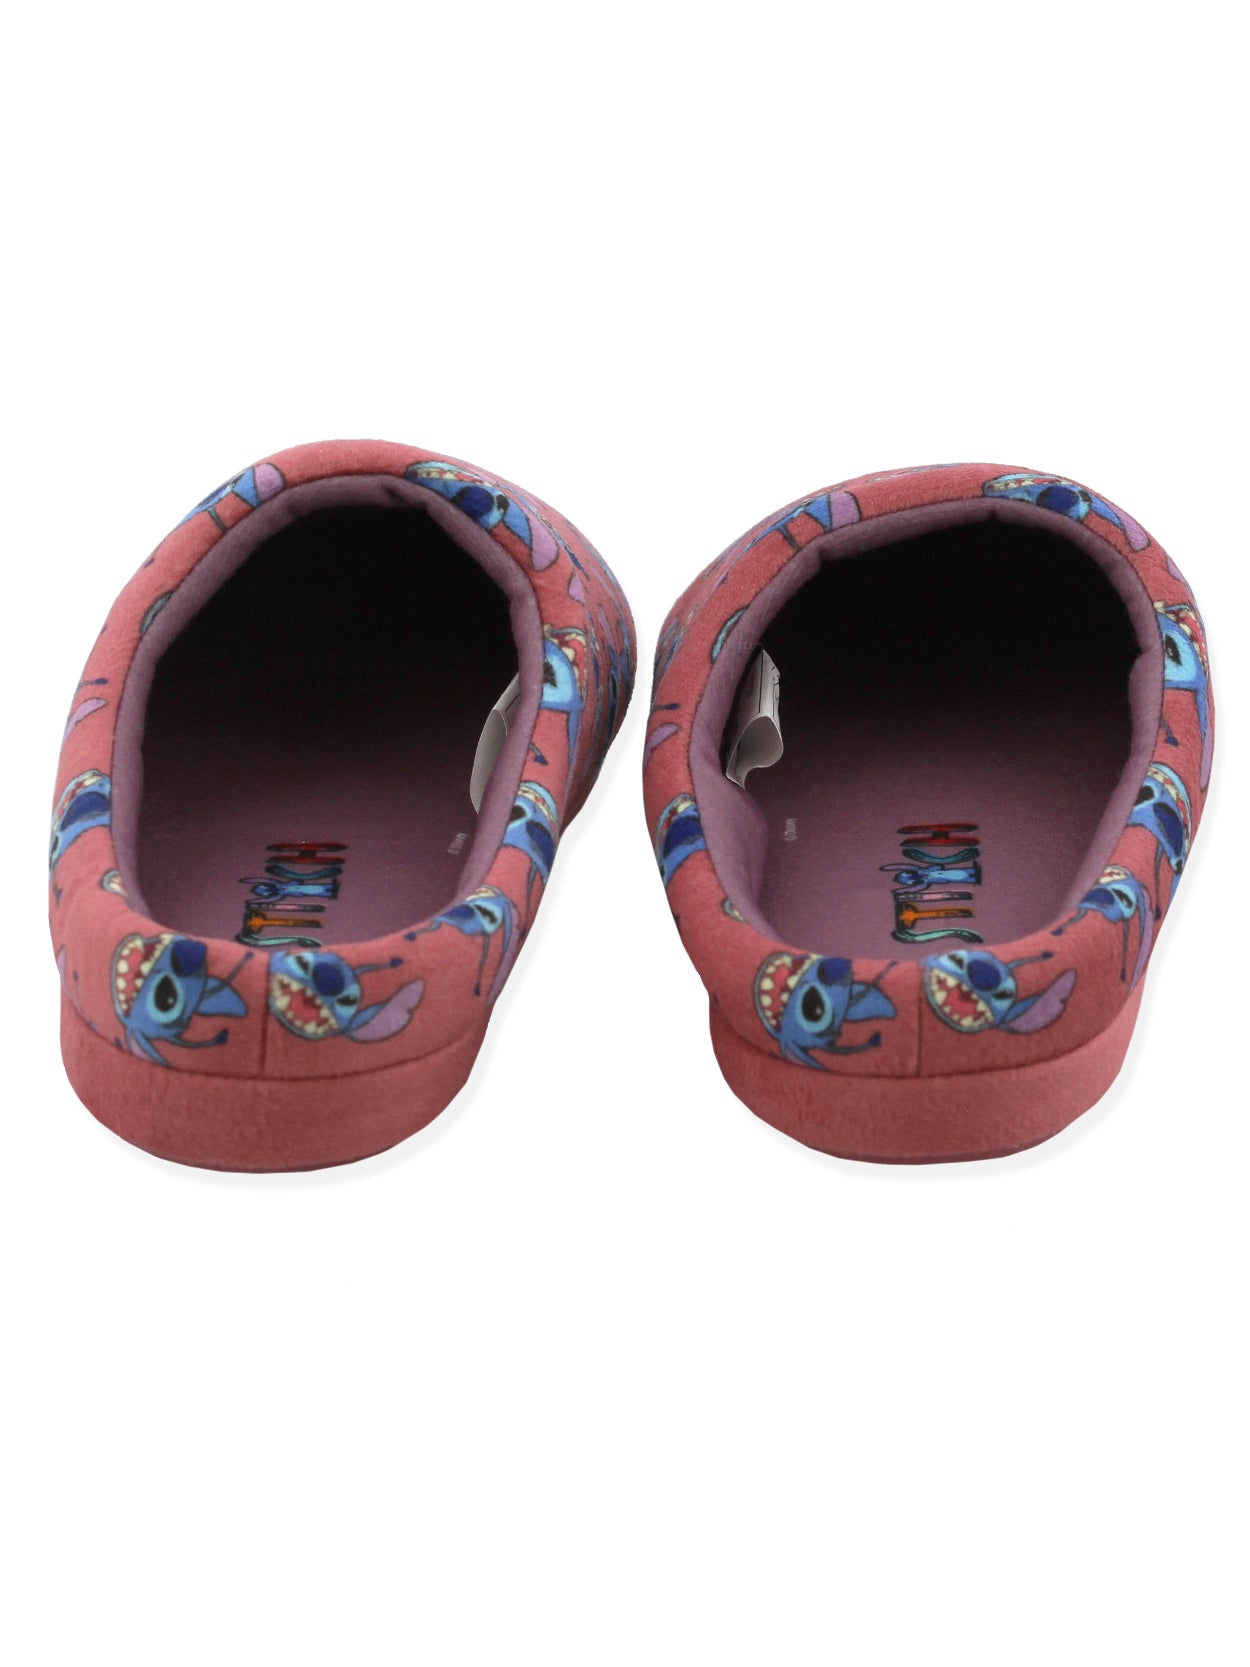 New Disney Lilo Stitch Slippers House Shoes Bath Beach Slip on Large To XL